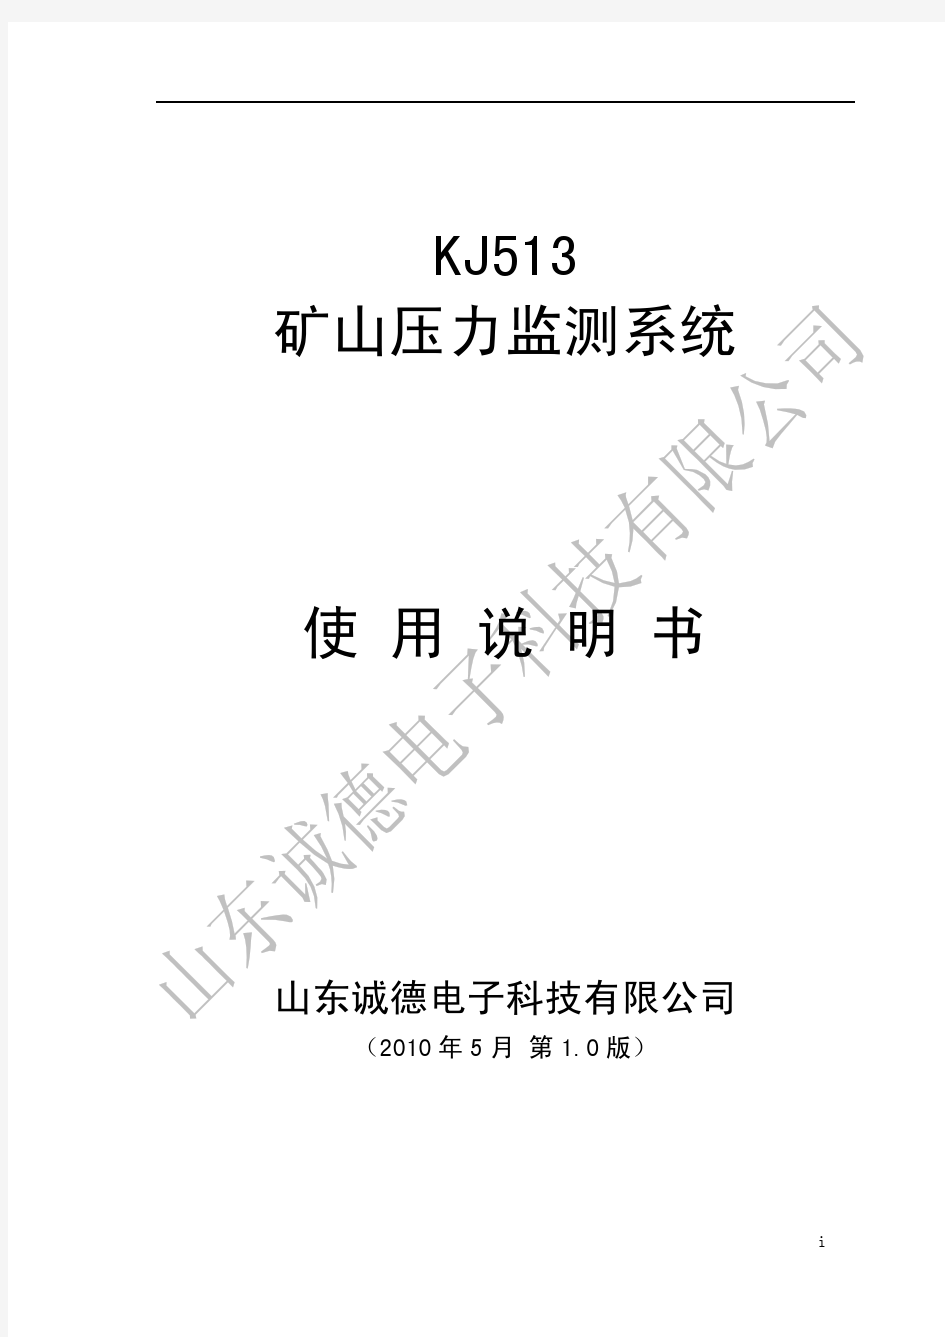 KJ513矿山压力监测系统使用说明书